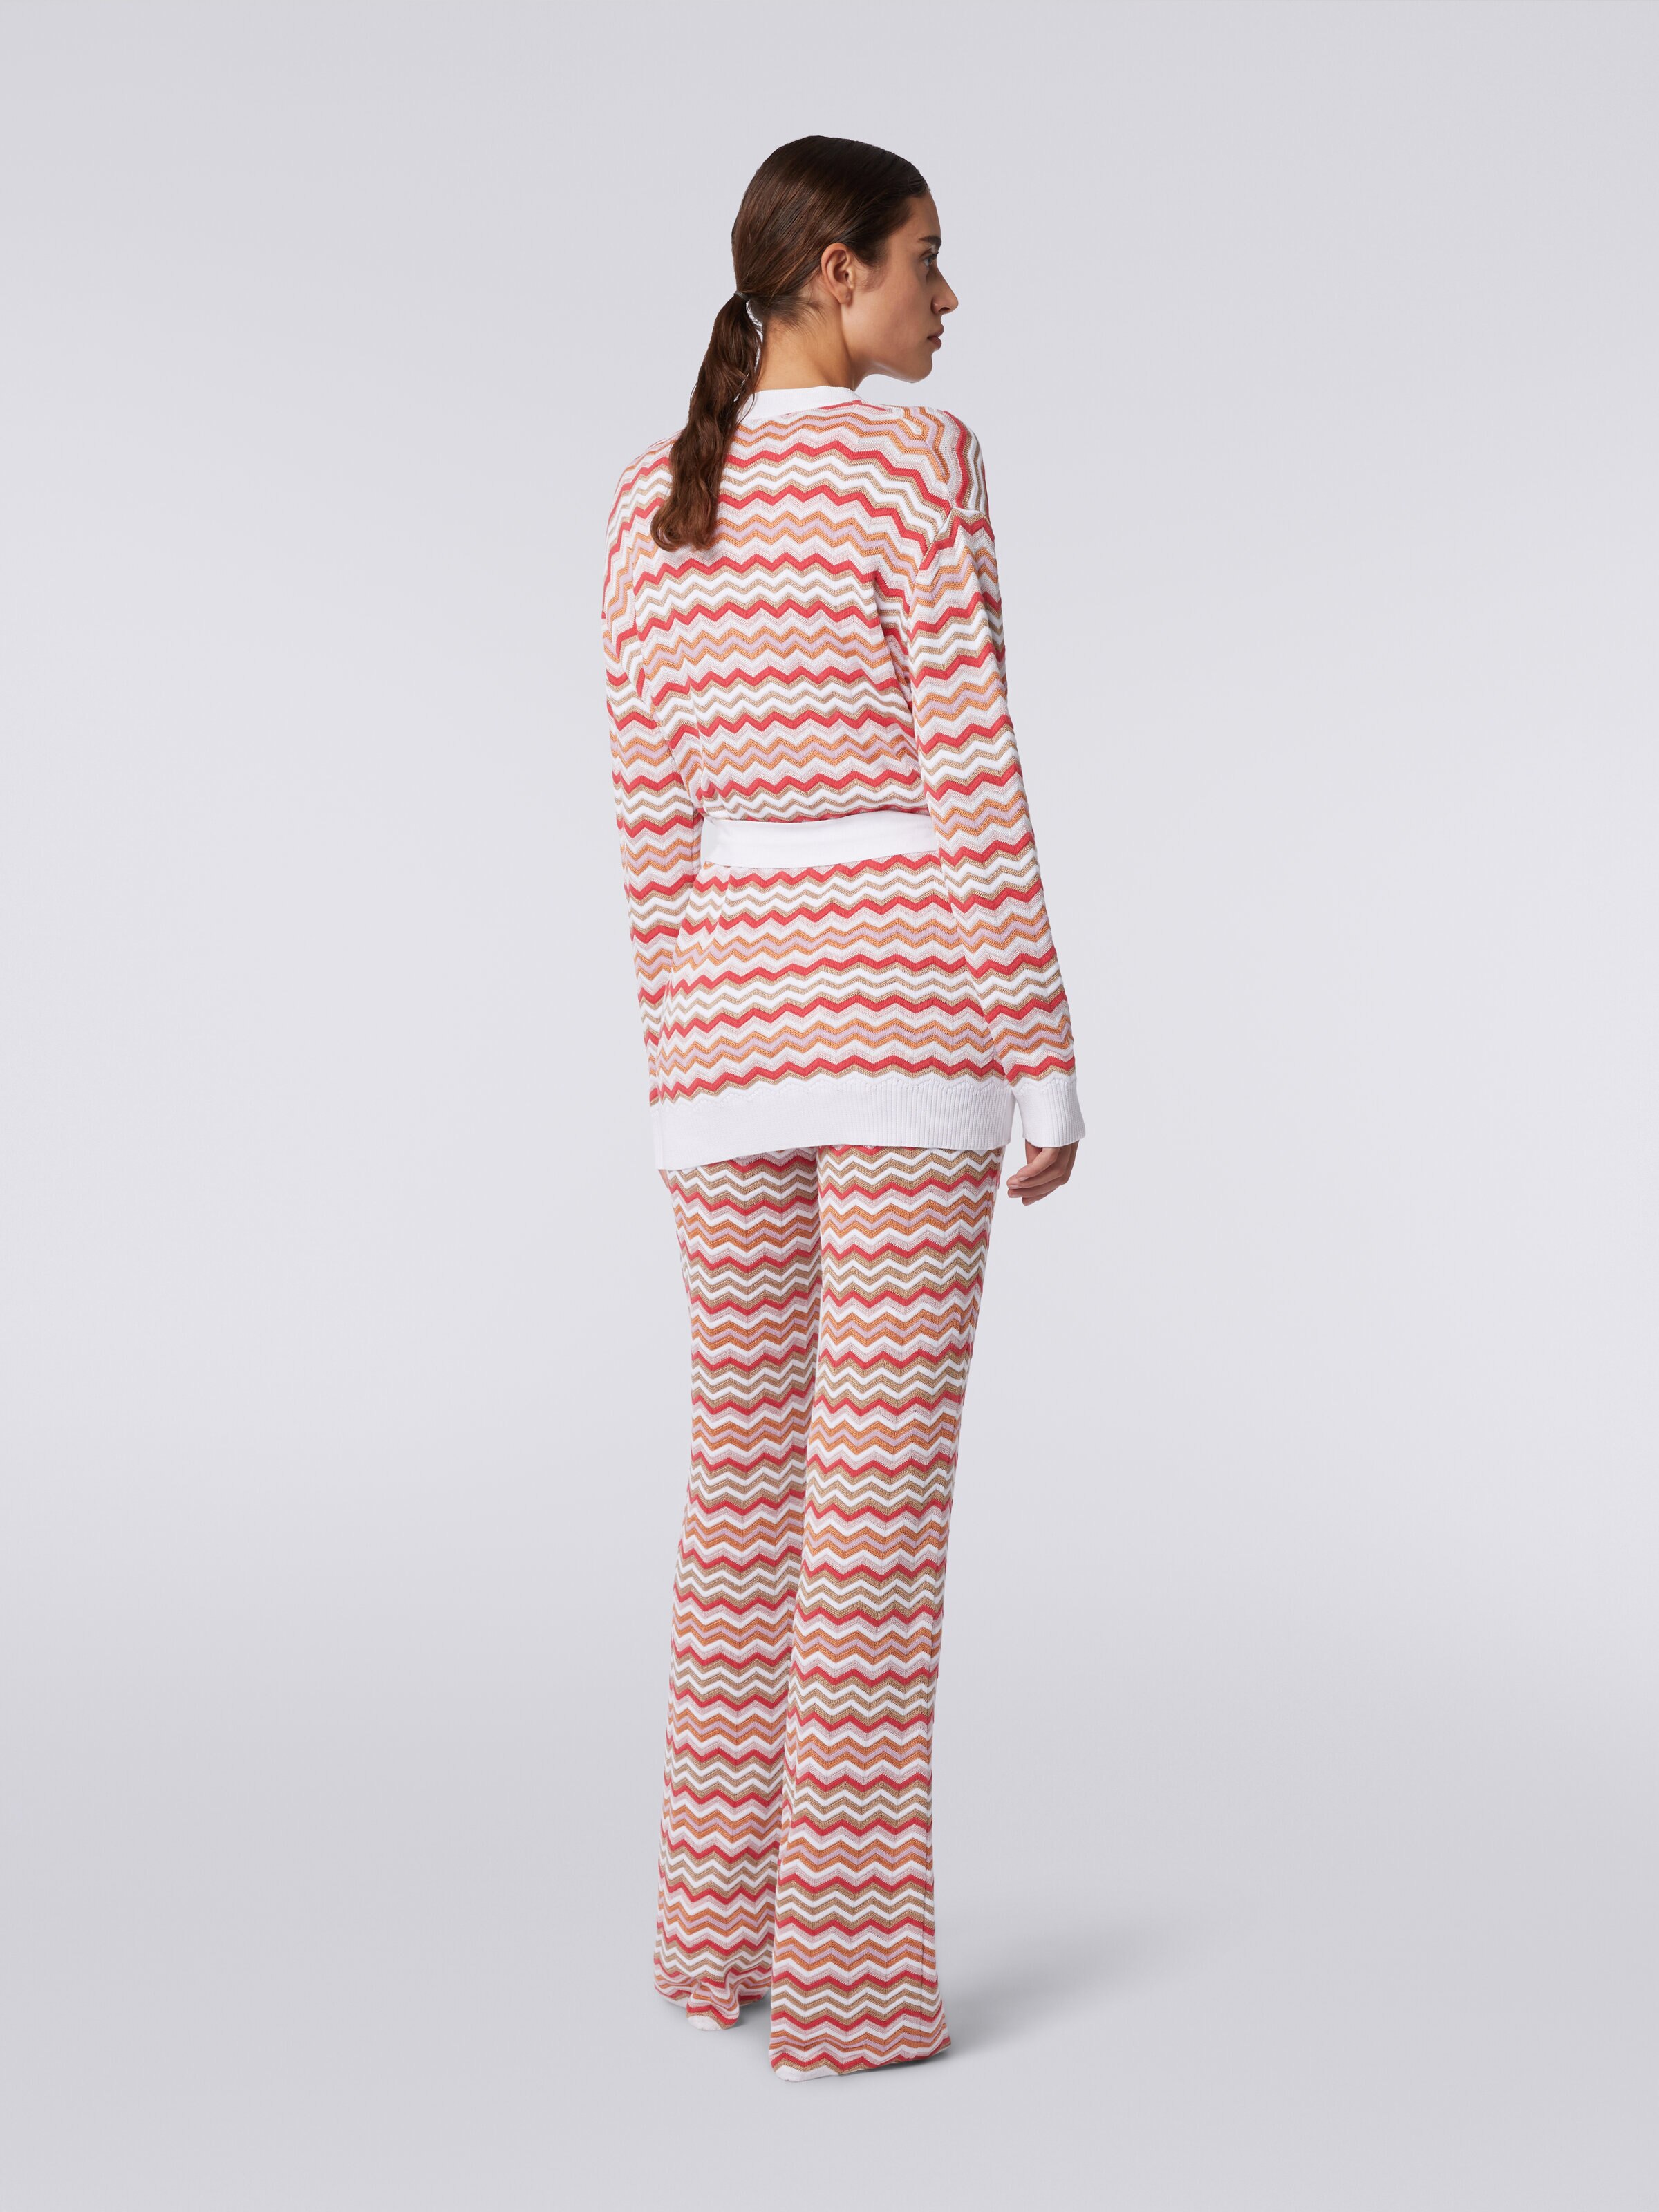 Cardigan in zigzag viscose and cotton knit , Multicoloured  - 3